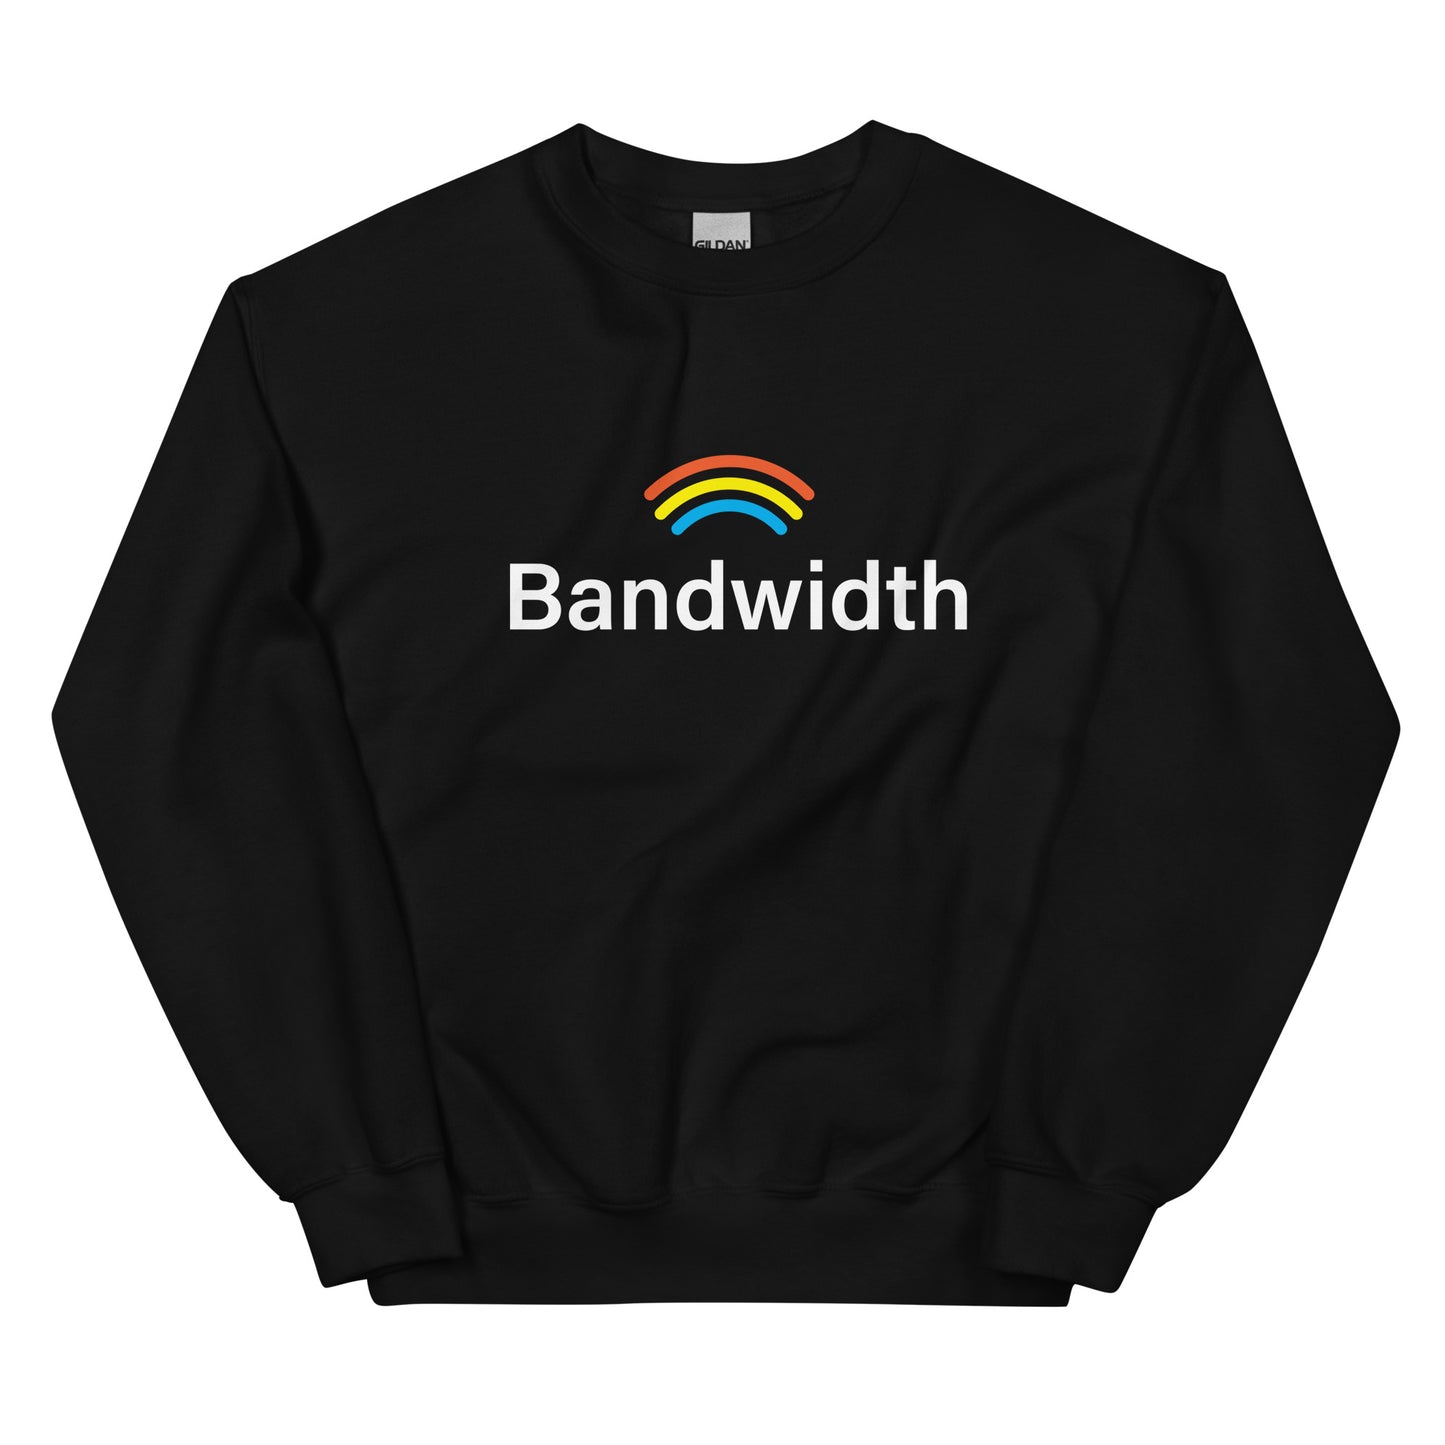 Bandwidth - Sustainably Made Sweatshirt